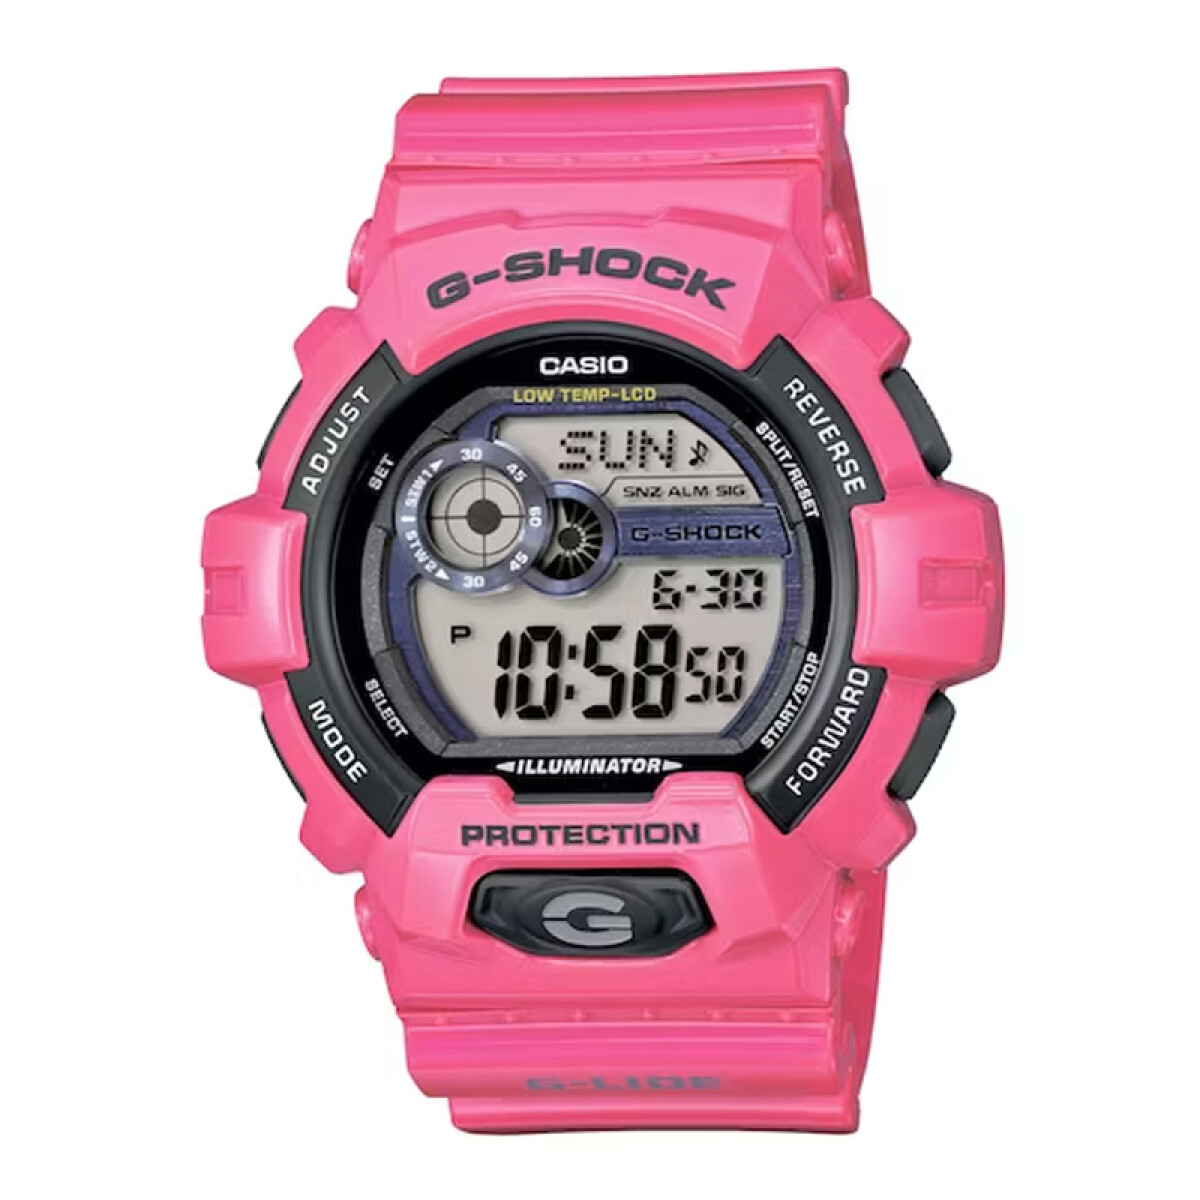 Reloj G-shock GLS-8900 - -4DR 